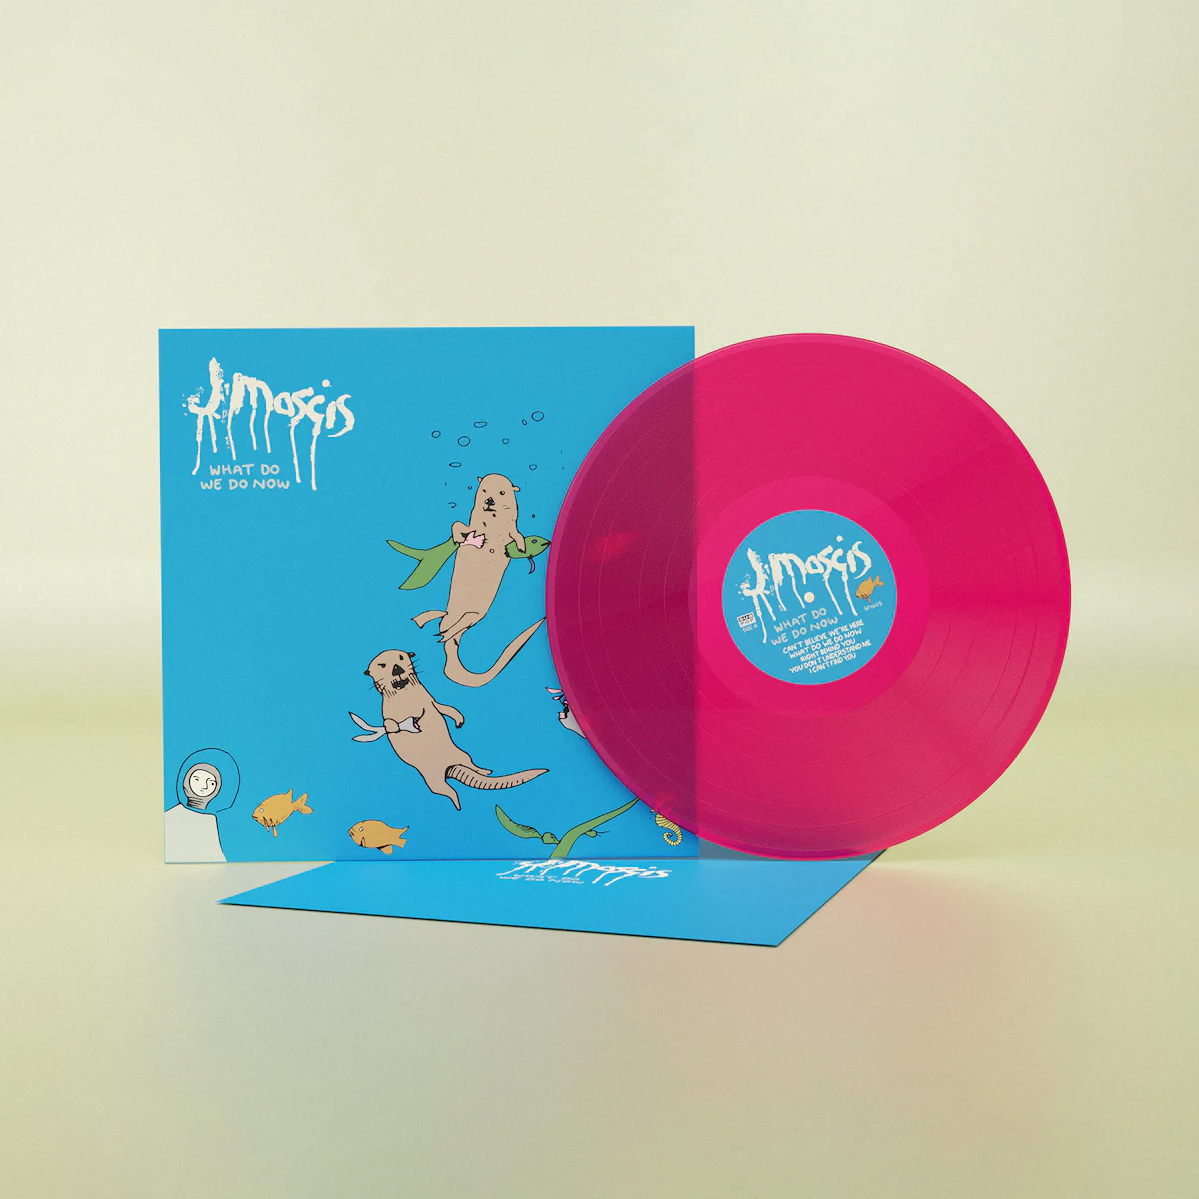 J Mascis - What Do We Do Now: Limited Neon Pink Loser Vinyl LP